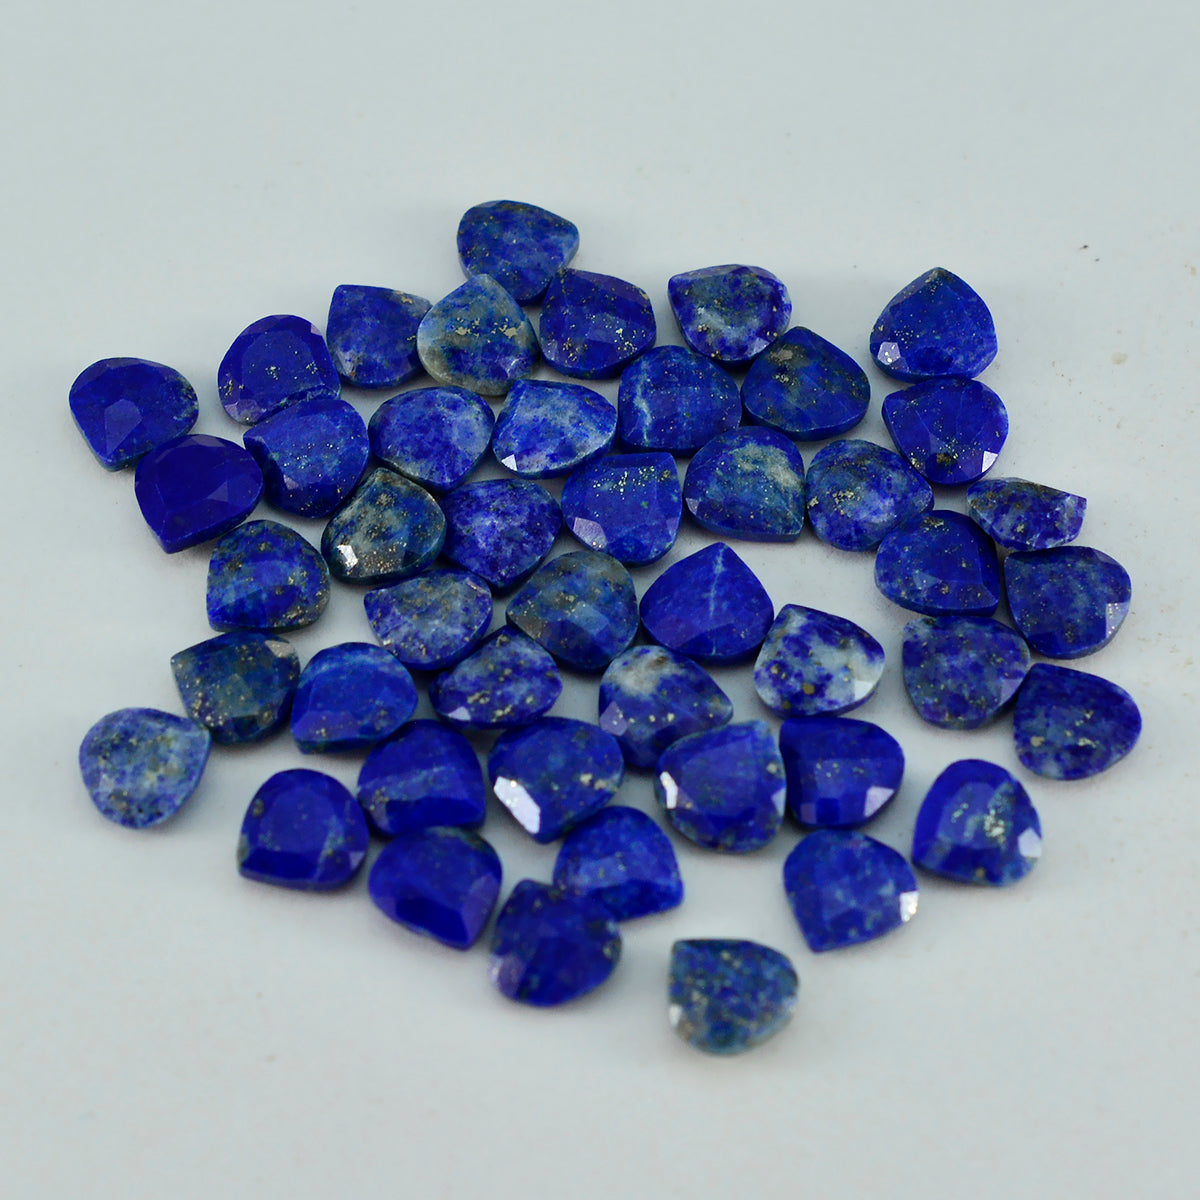 Riyogems 1PC Real Blue Lapis Lazuli Faceted 7x7 mm Heart Shape fantastic Quality Loose Gems